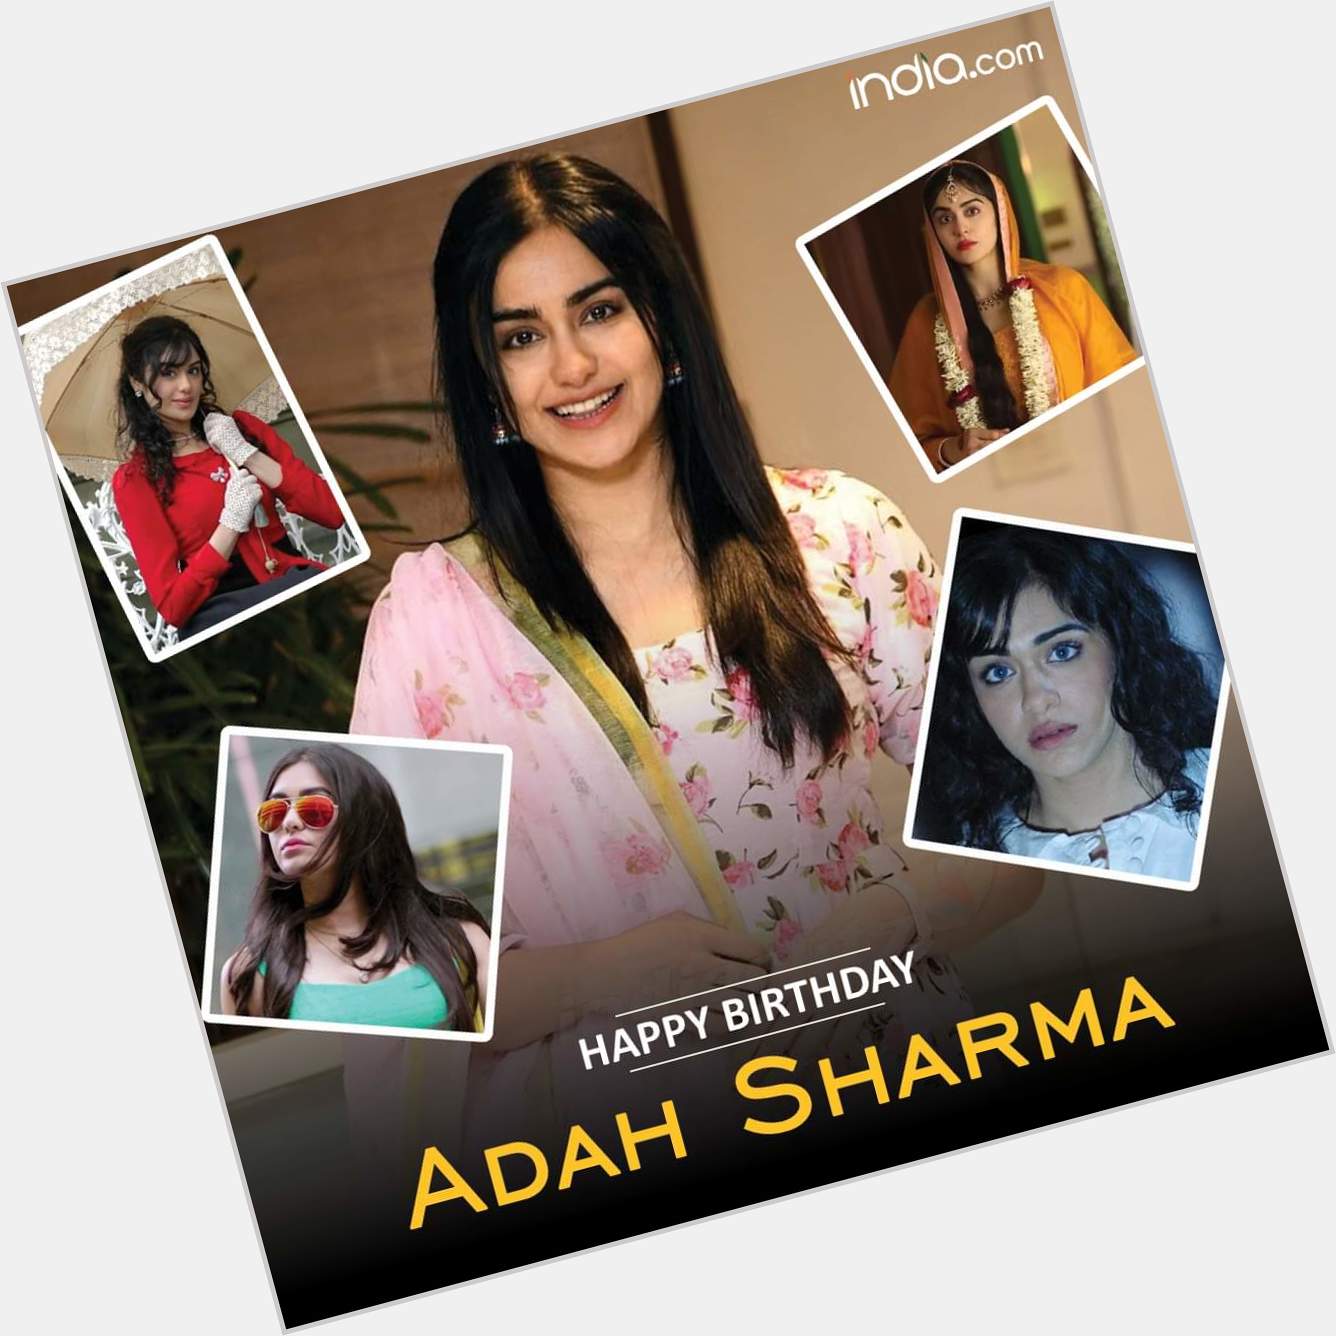  Wishing the beautiful actress Adah Sharma S a very Happy Birthday          